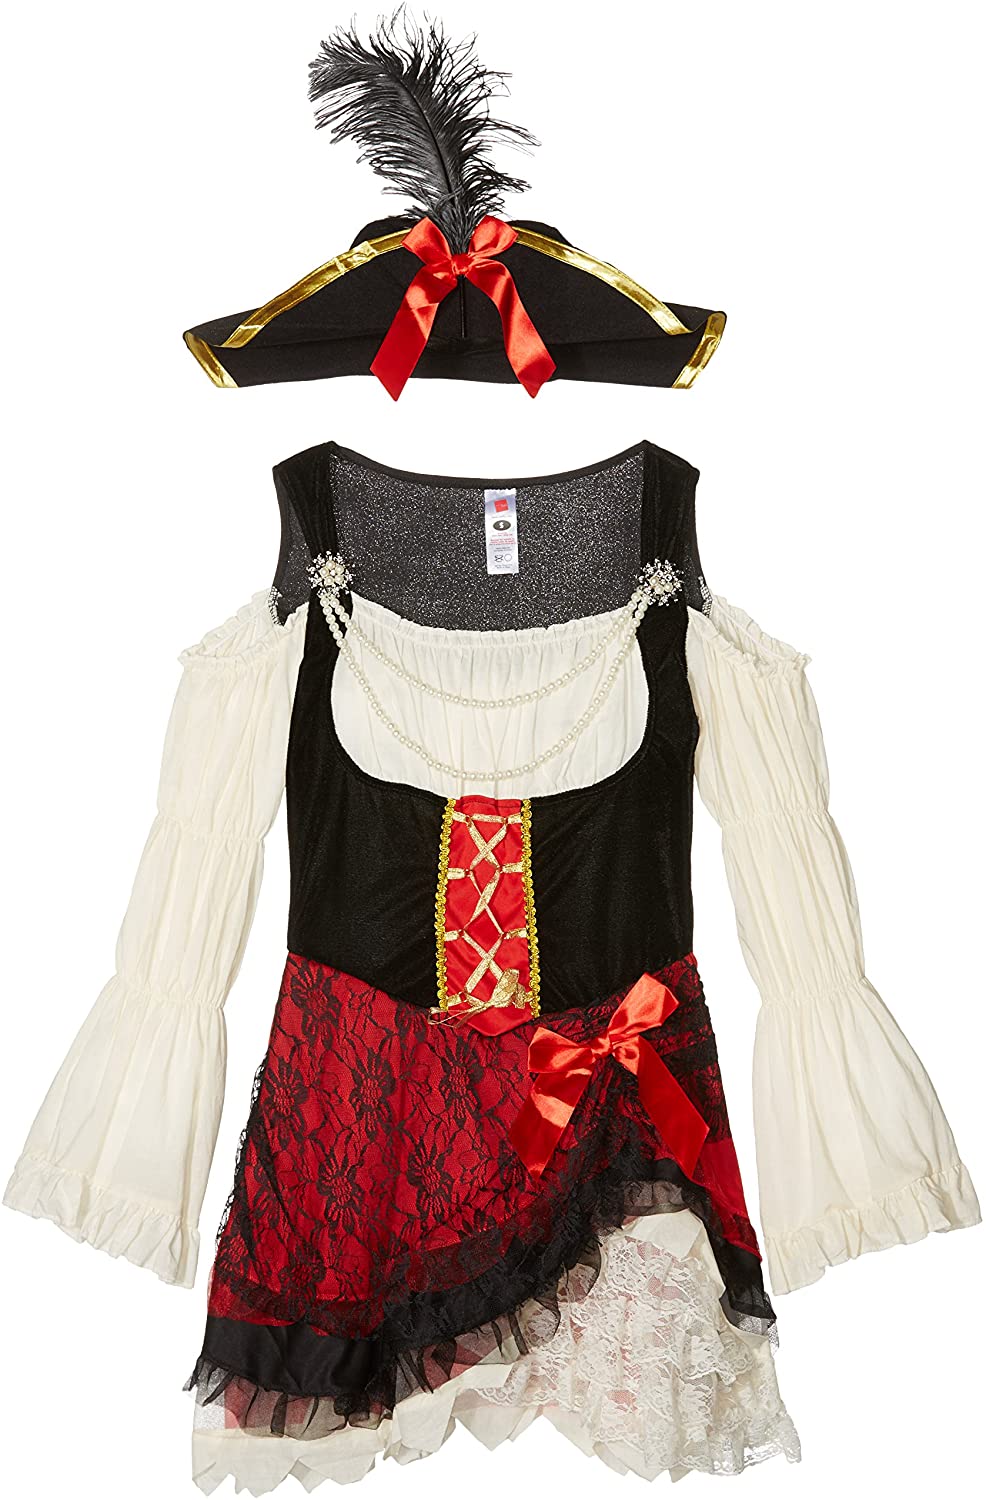 Smiffys Glamorous Lady Pirate Costume Toptoy 1011